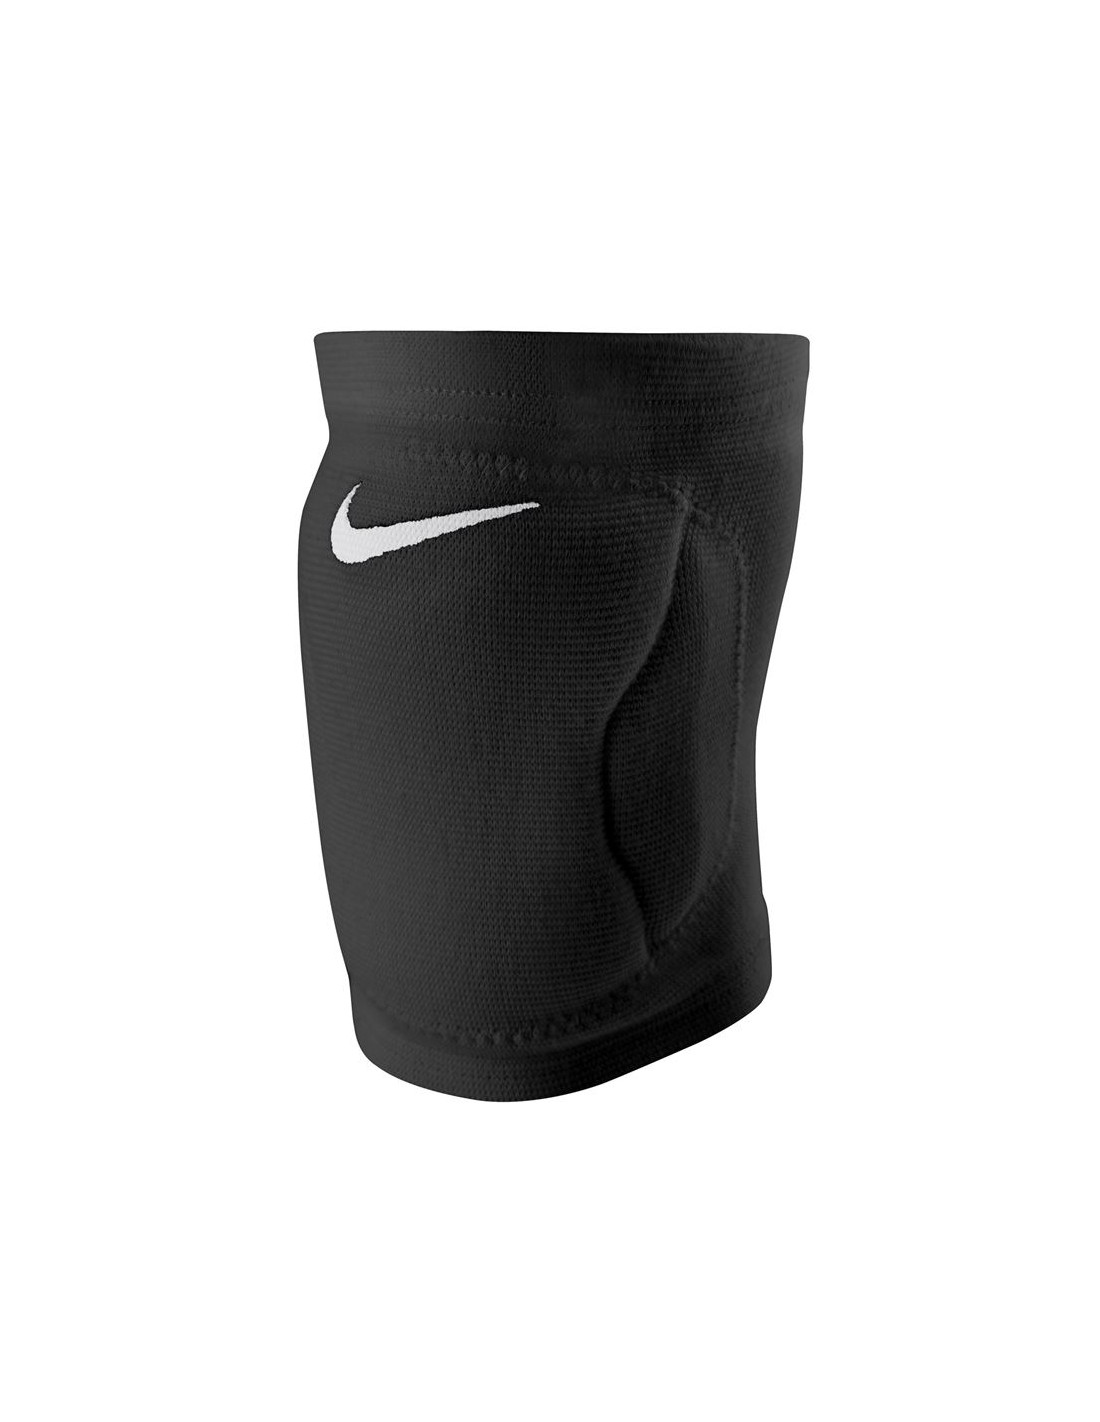 Nike streak volleyball knee pad ce